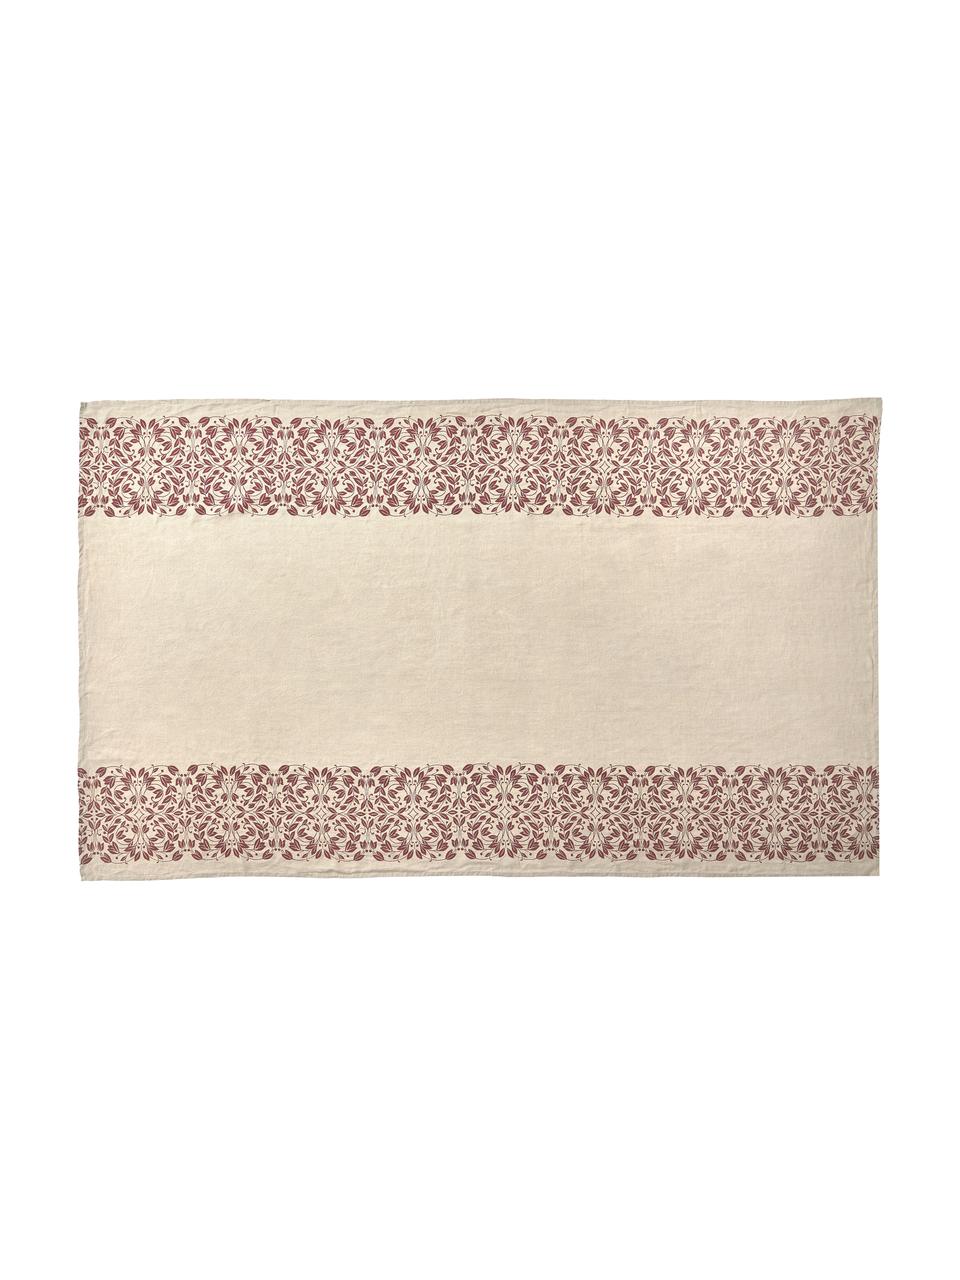 Mantel de lino Matilda, 100% lino, Beige claro, color vino, De 6 a 10 comensales (An 150 x L 250 cm)